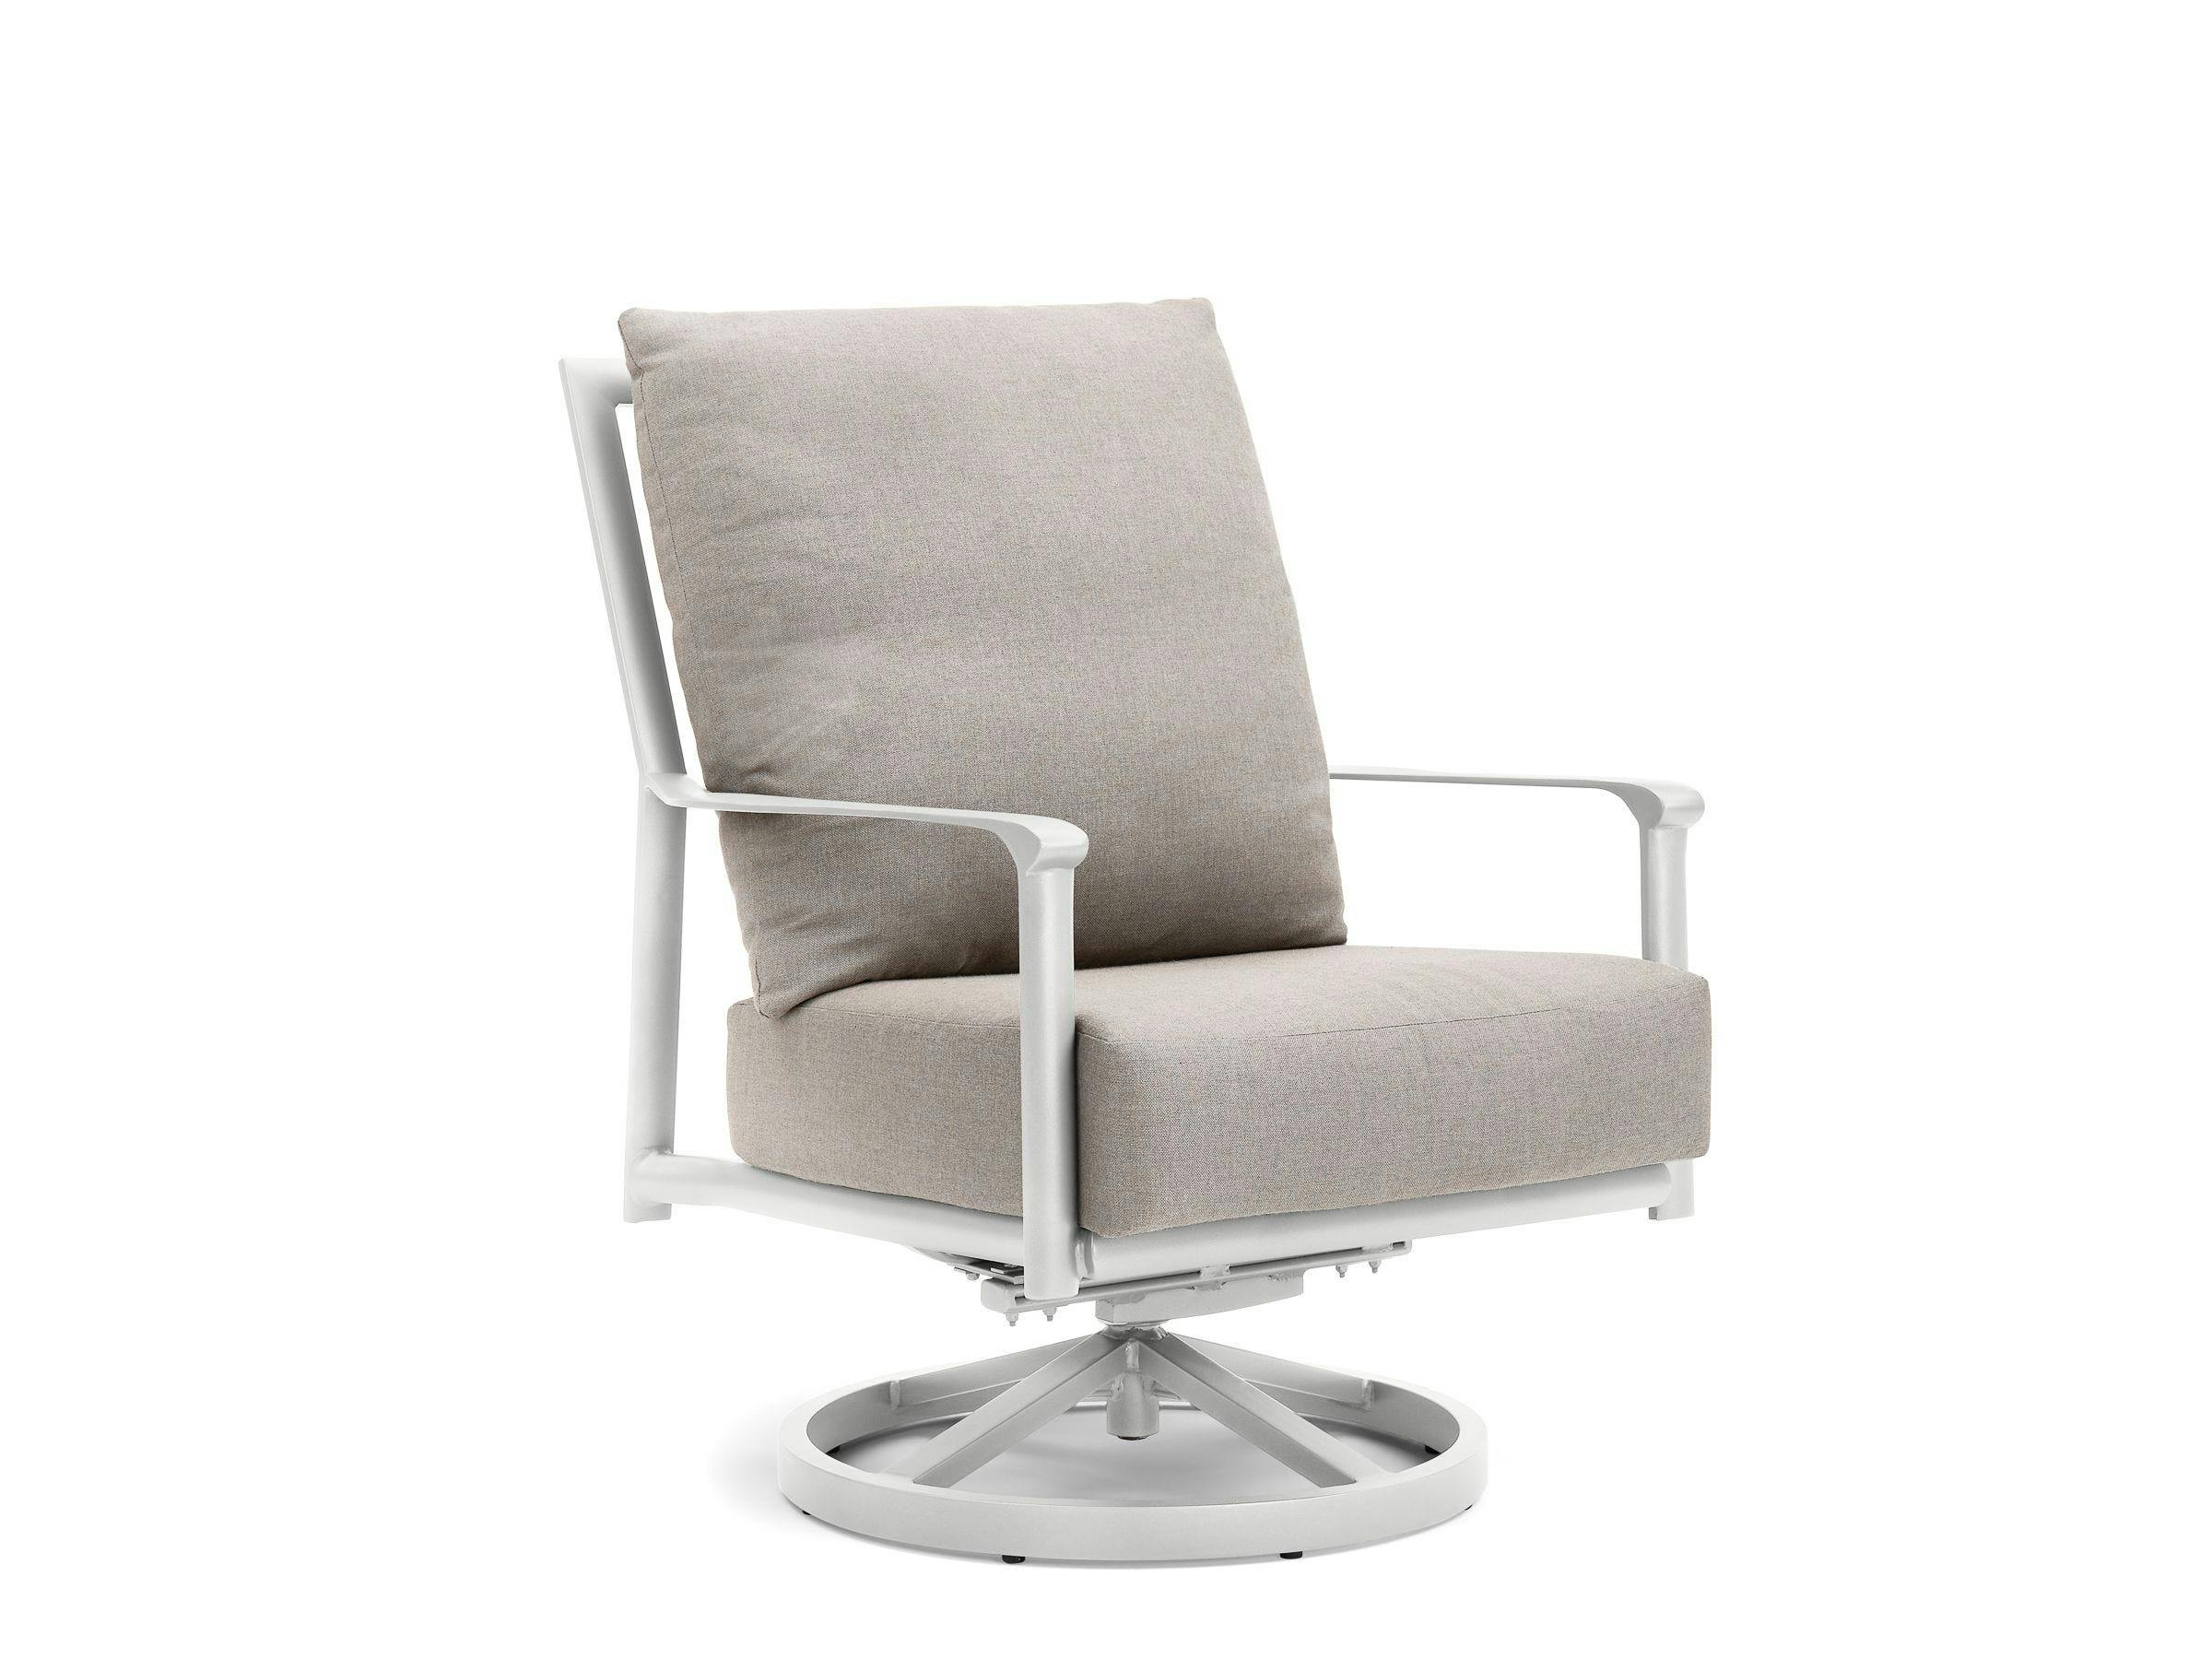 Aspen Cushion High Back Swivel Rocker Lounge Chair